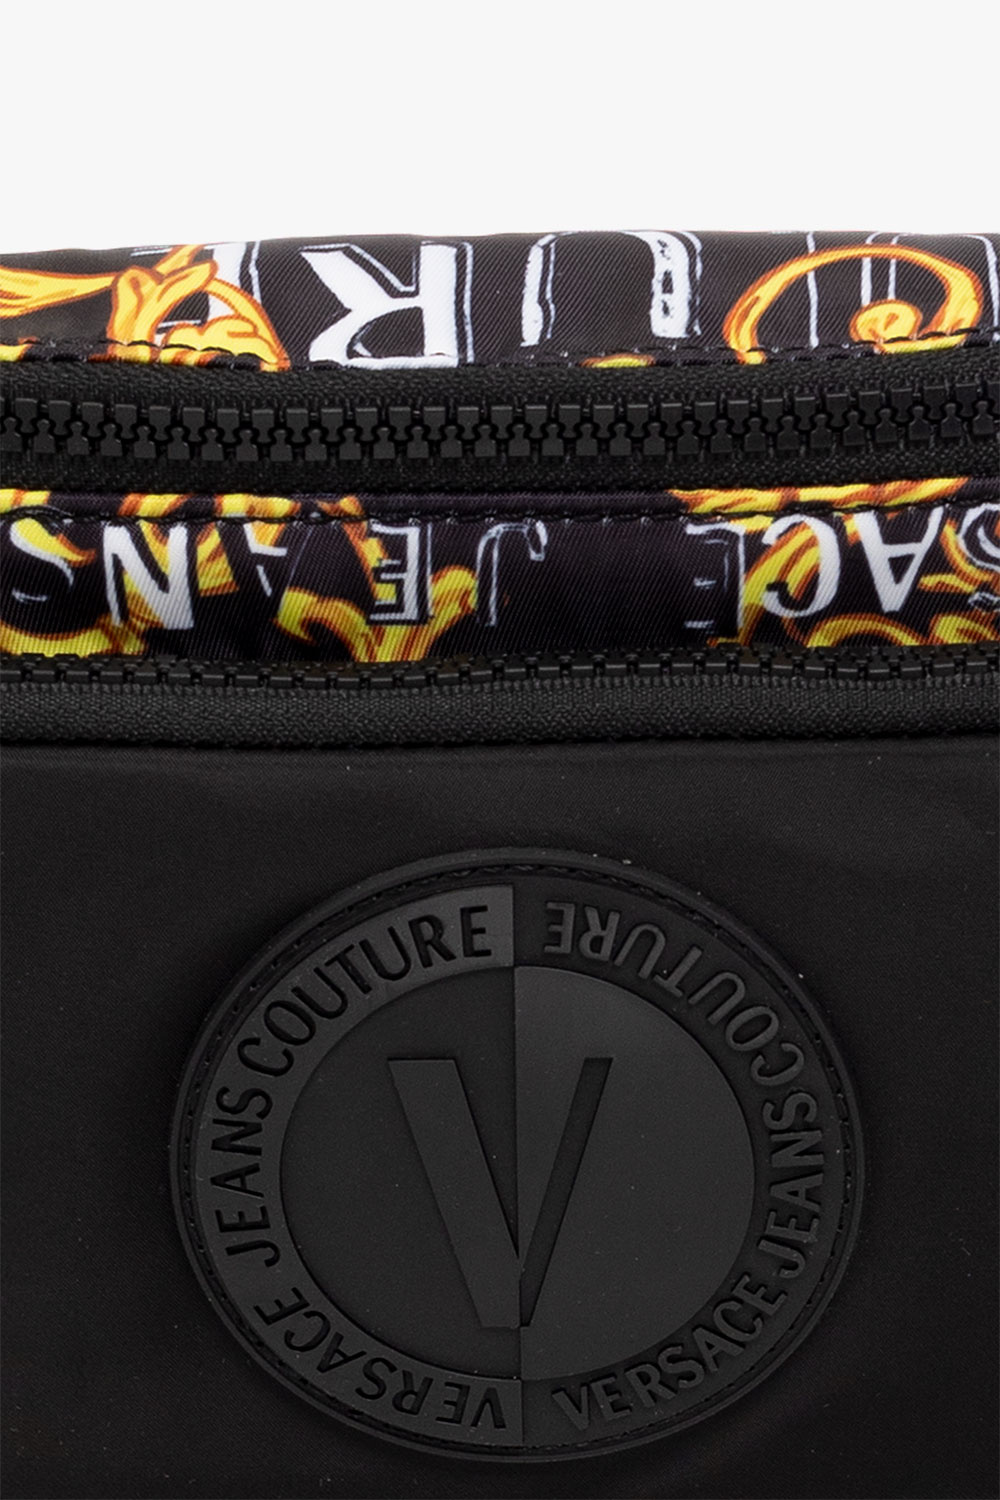 Versace Jeans Couture Patterned belt bag